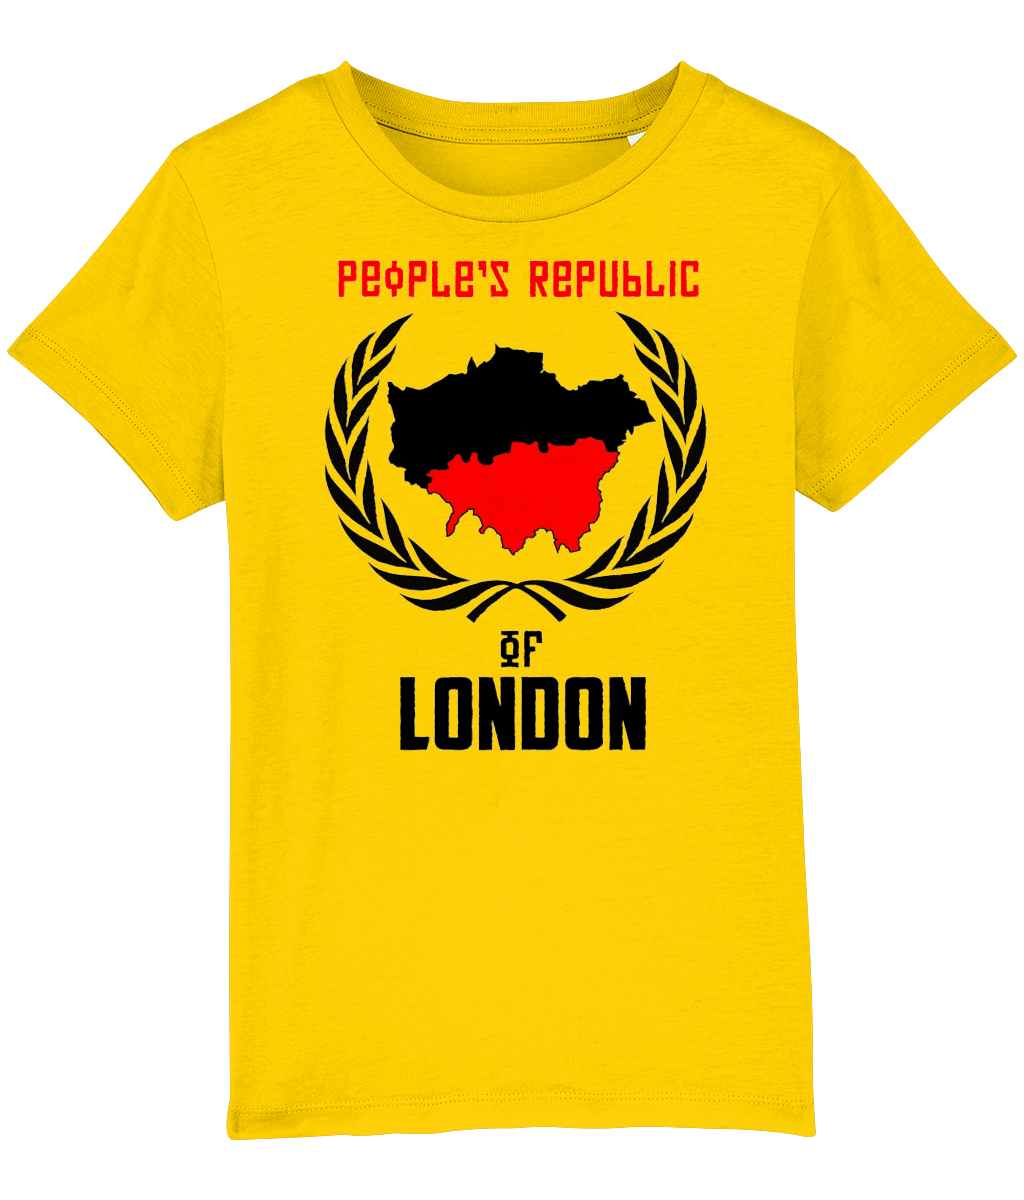 People's Republic of London Kids T-Shirt